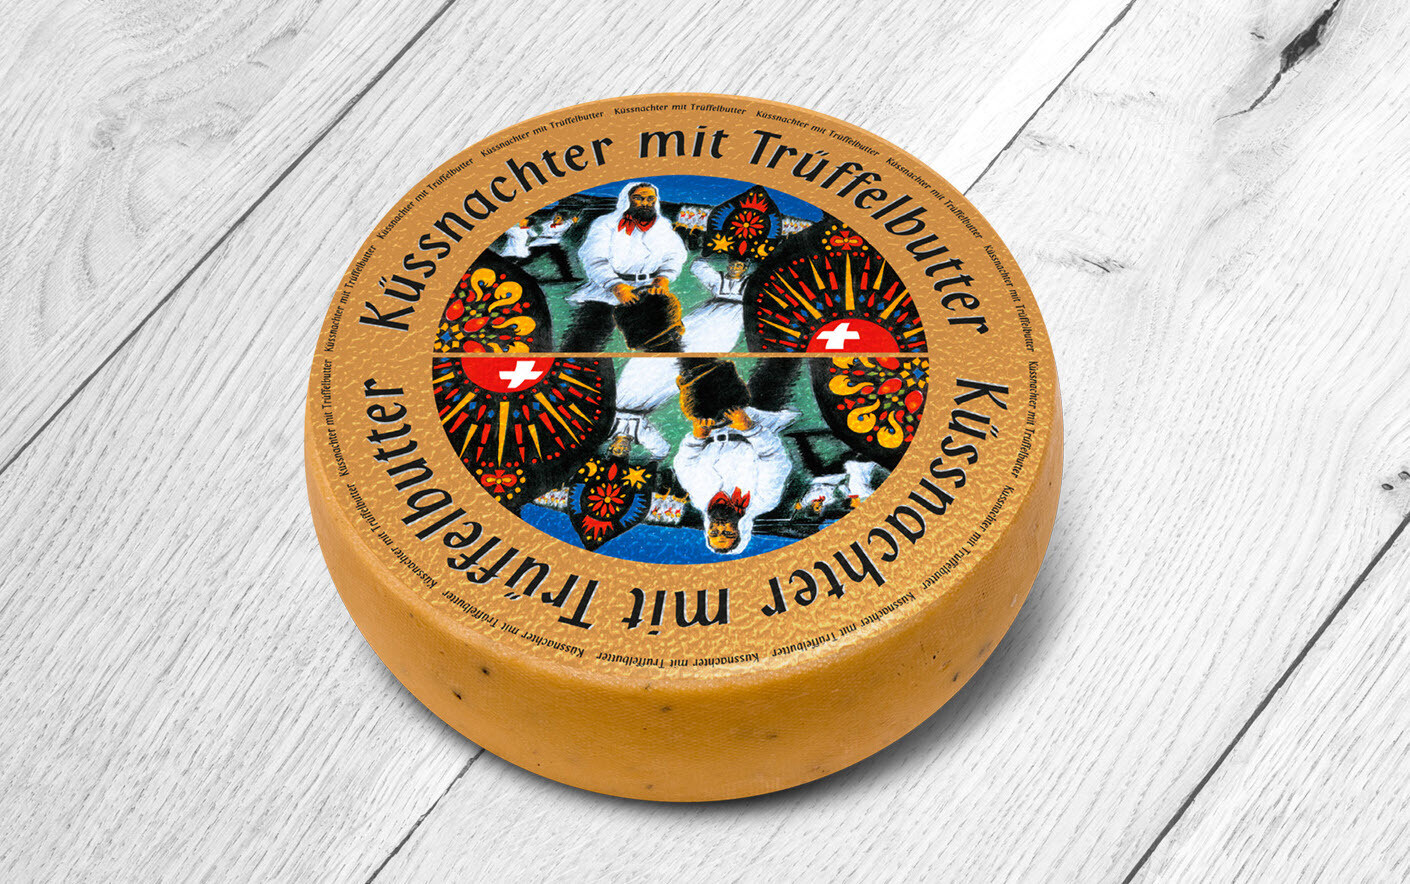 Küssnachter Trüffelbutter Käse - laktosefrei (200g / 500g) - Saisonende - ausverkauft